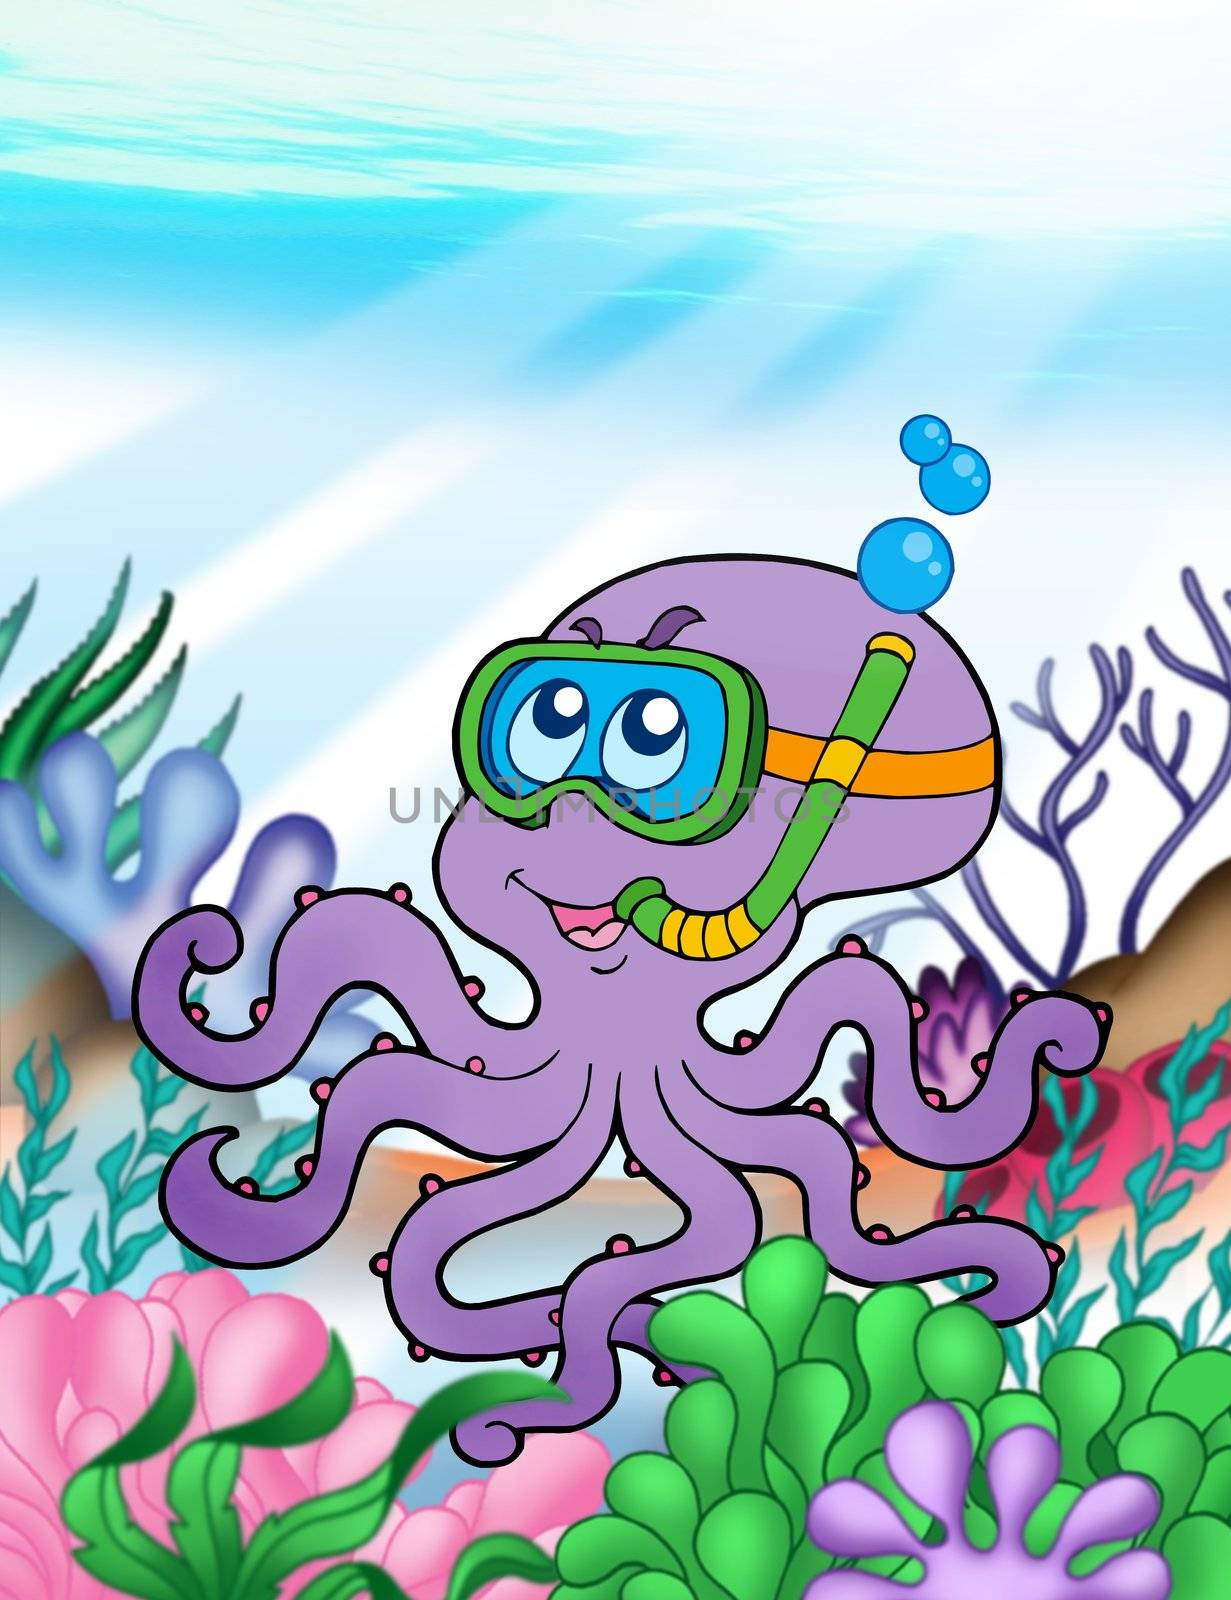 Octopus diver underwater - color illustration.